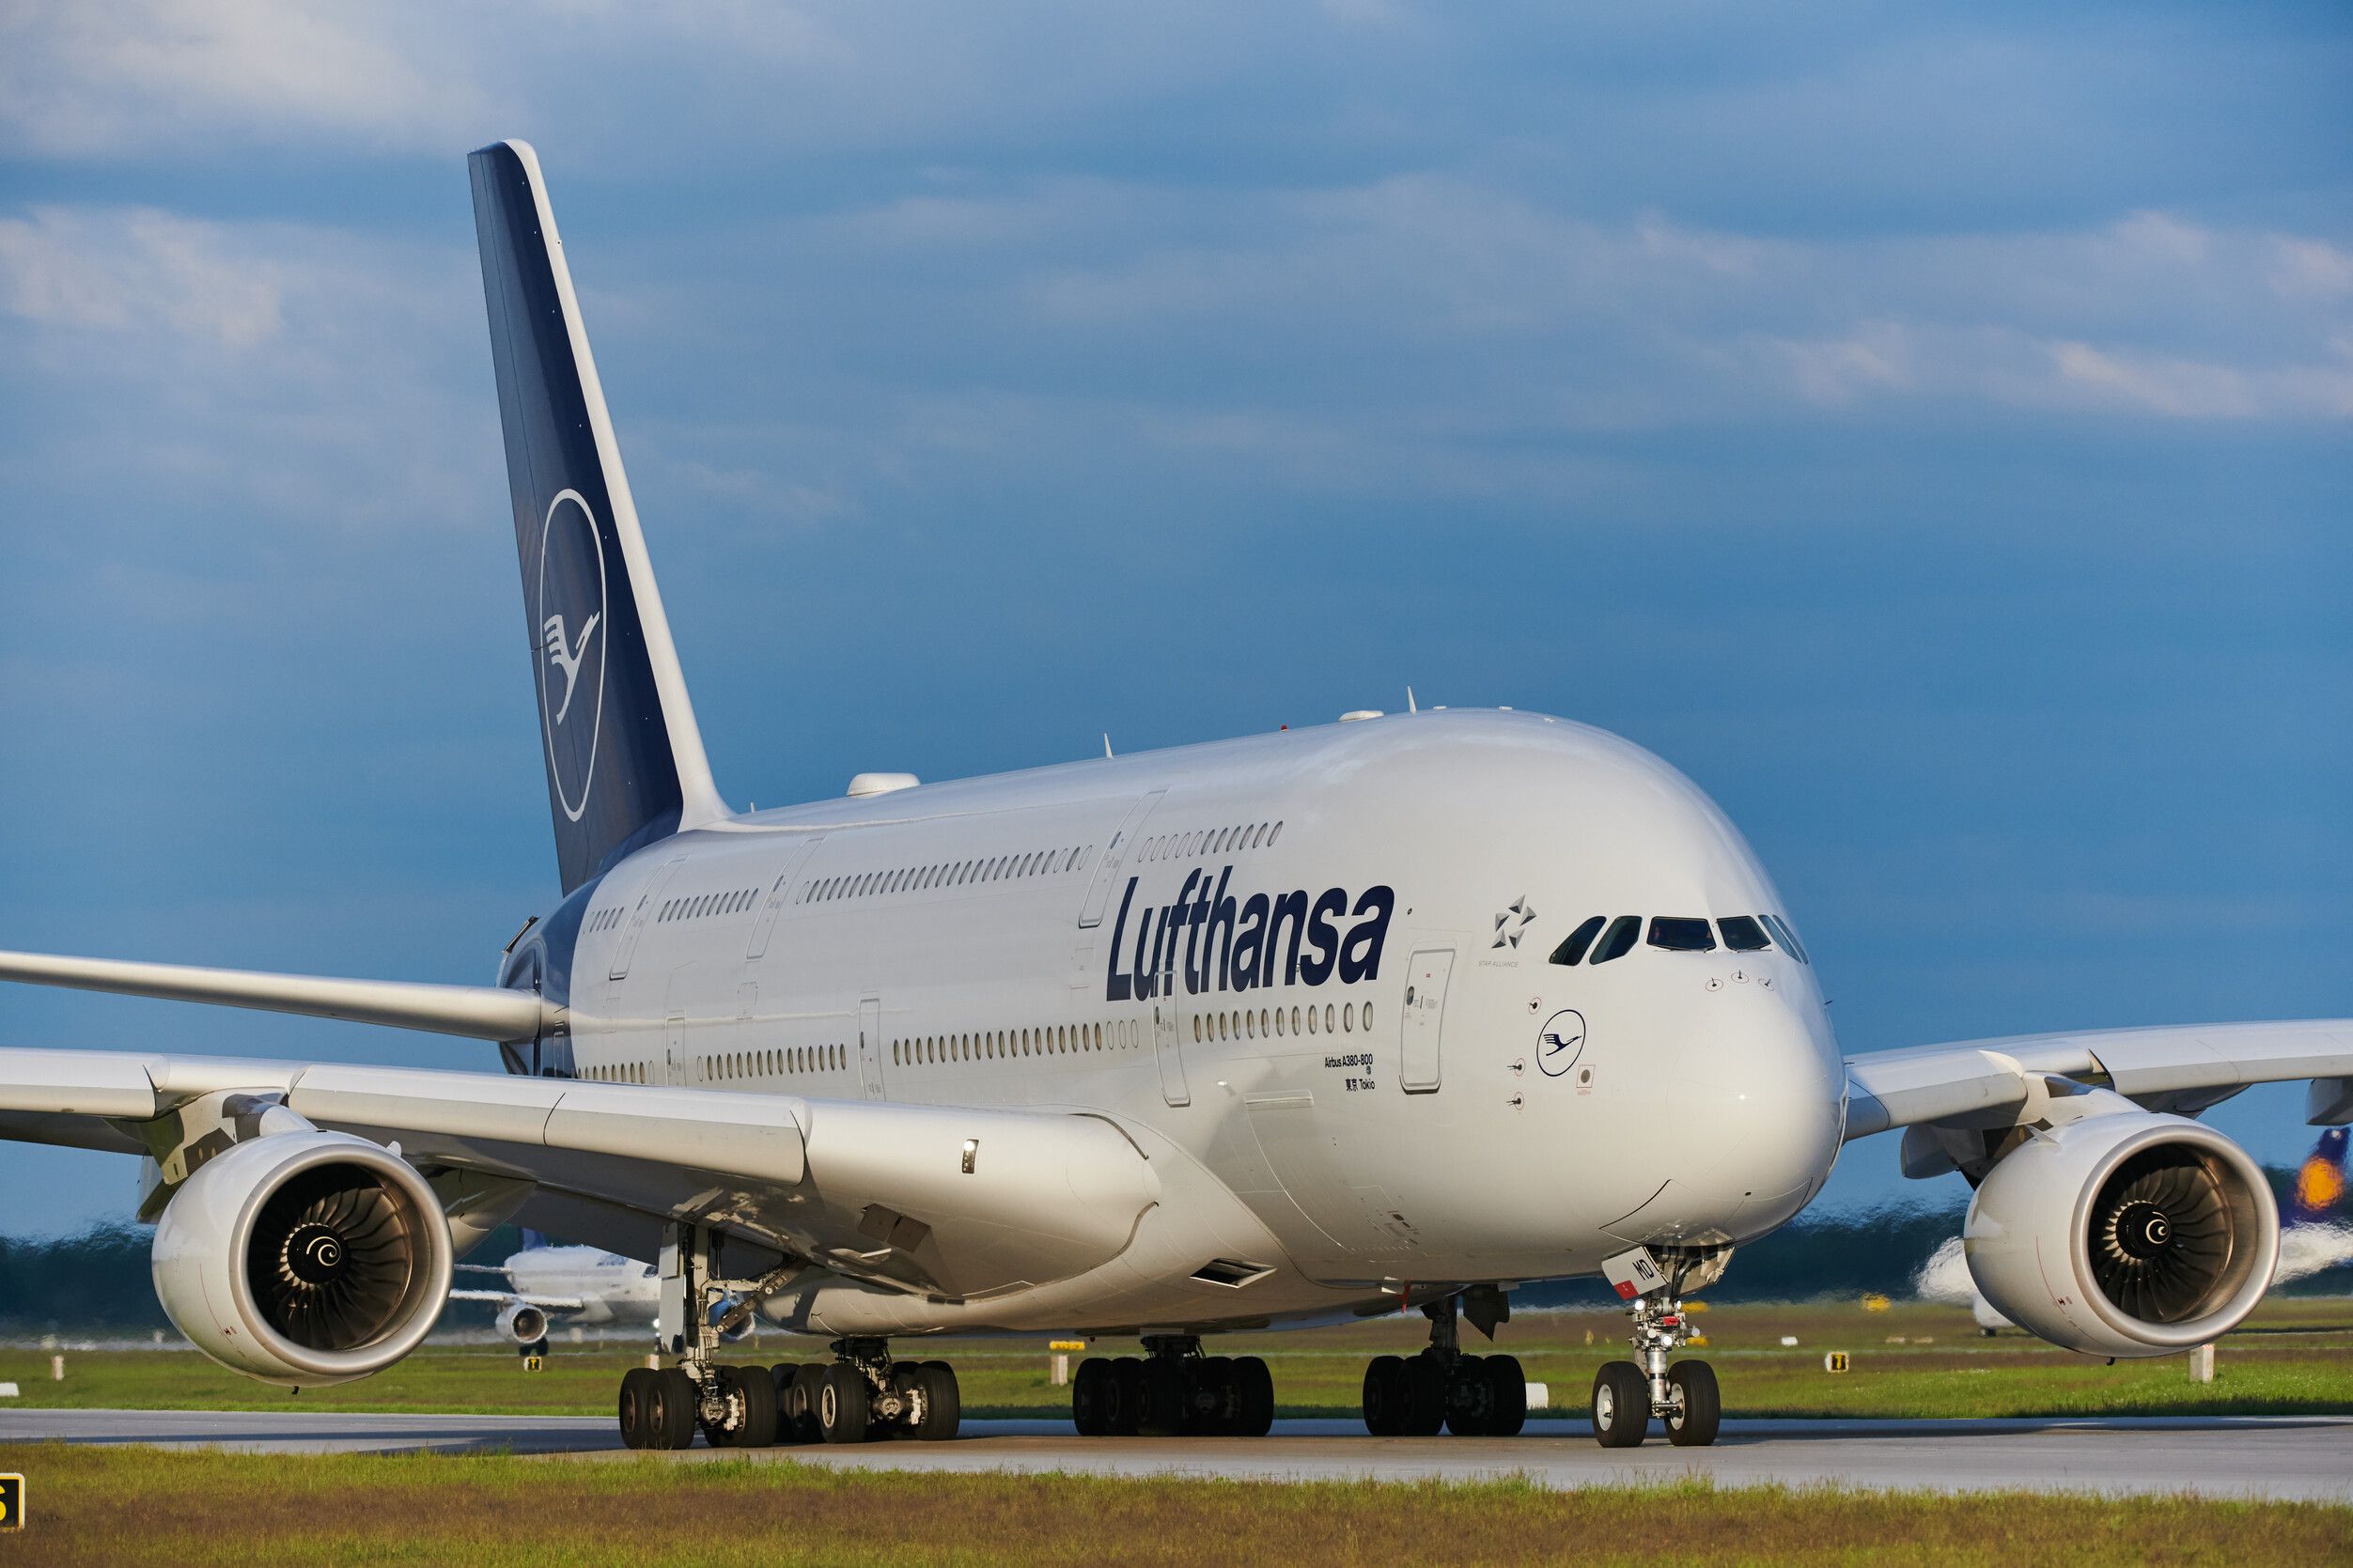 Lufthansa A380 on the ground